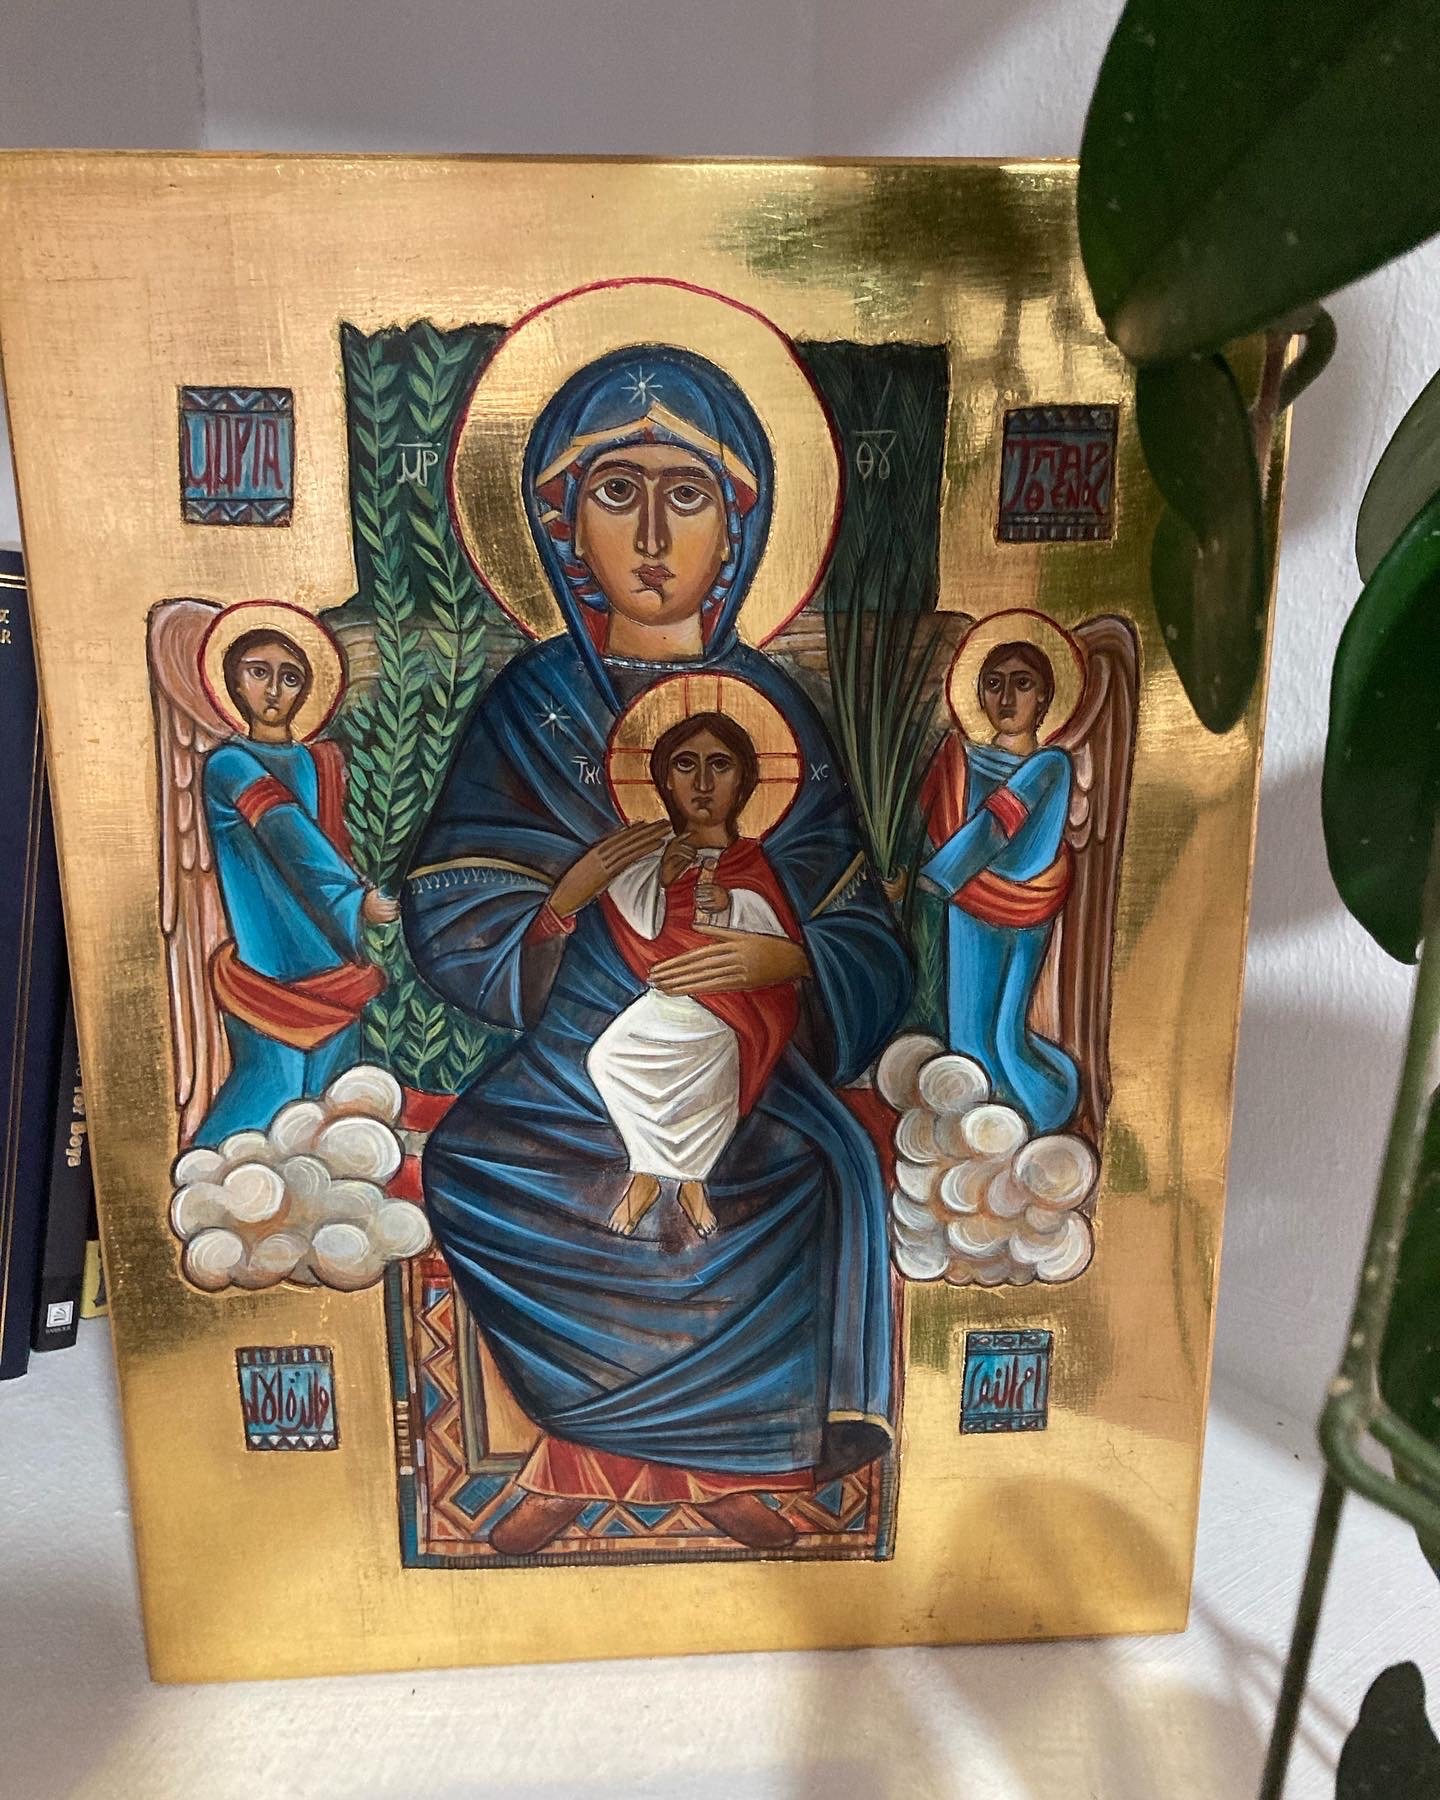 Ϯⲑⲉⲟⲧⲟⲕⲟⲥ la theotokos copte, icône de la Mère de Dieu